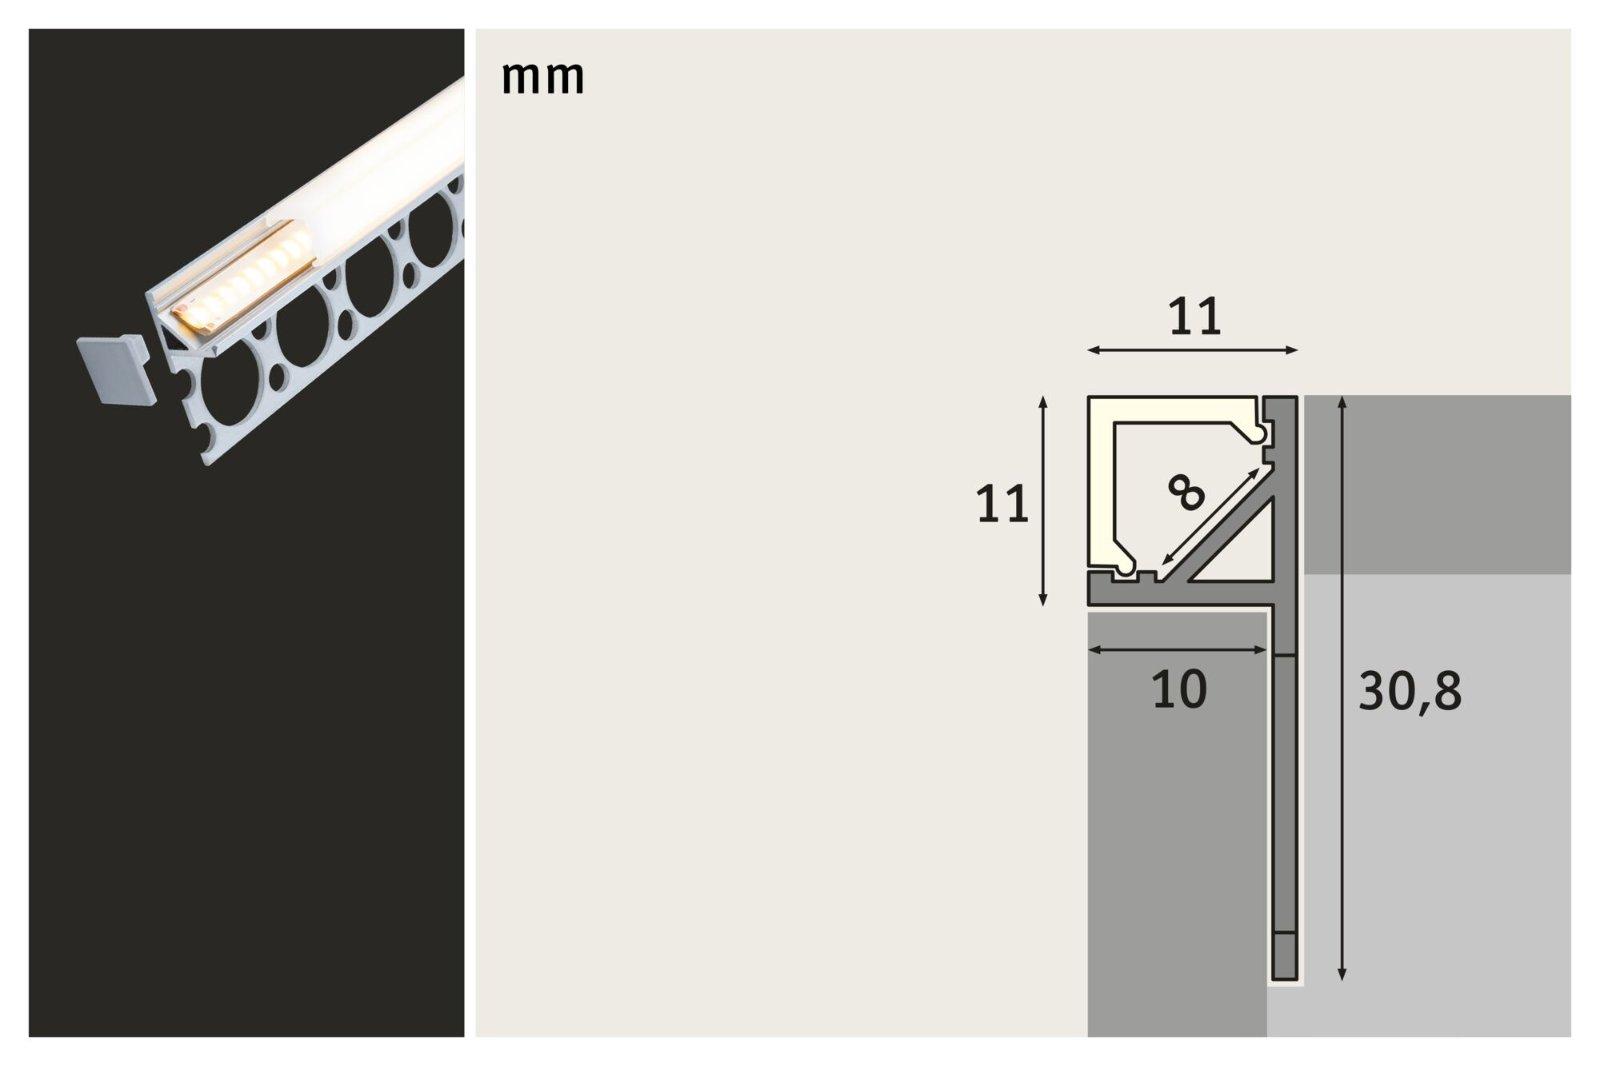 LumiTiles LED Strip Profil Frame 2m hliník eloxovaný/satén - PAULMANN